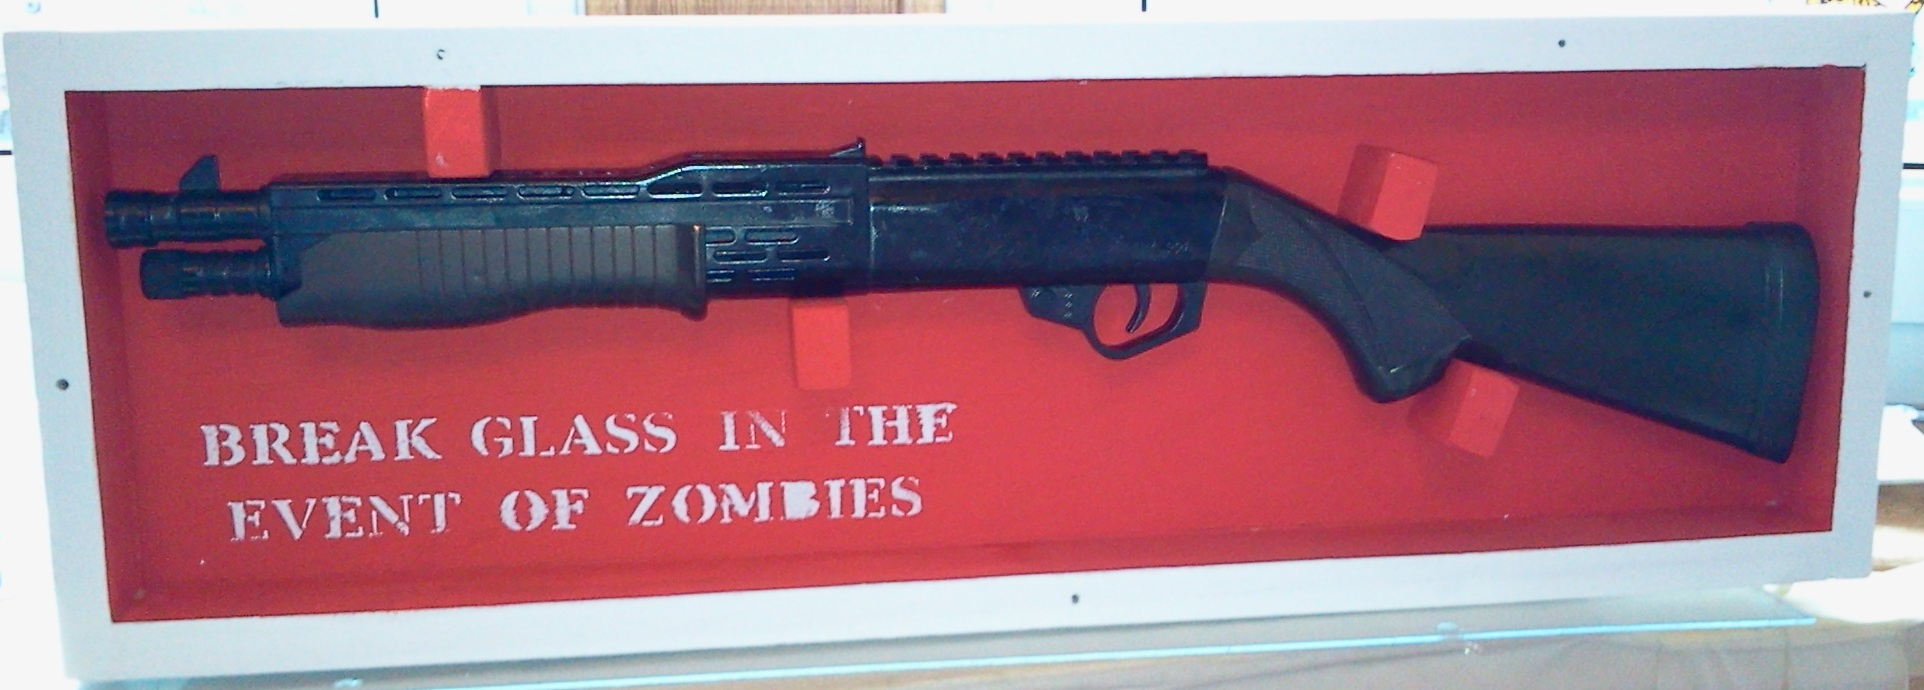 Zombie Survival Defence Kit - Shotgun